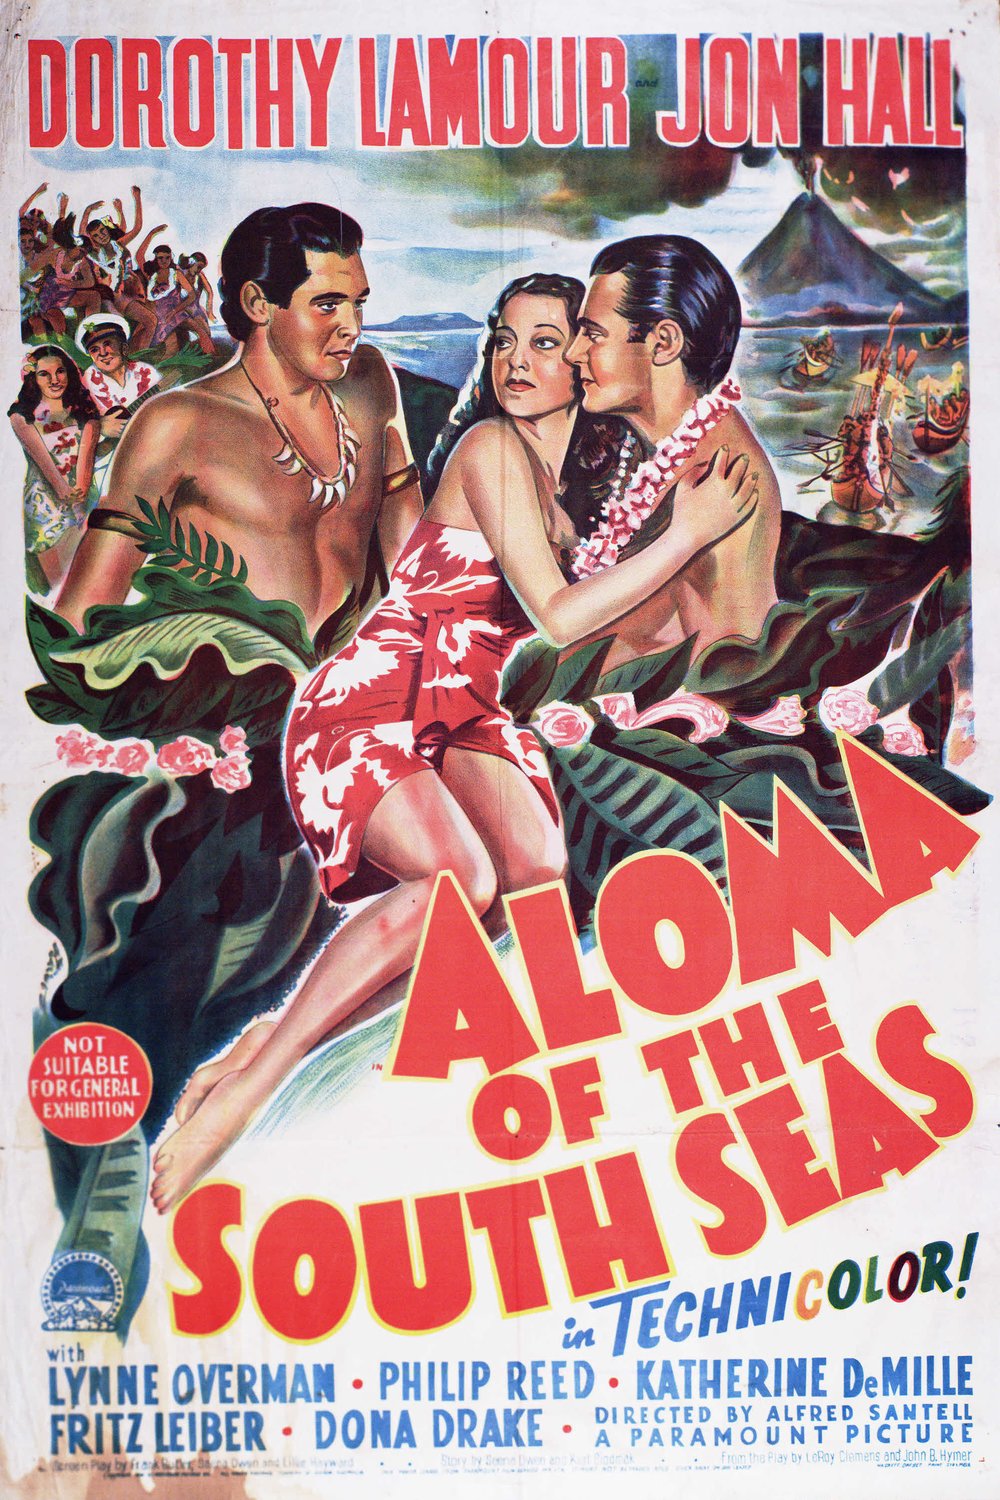 L'affiche du film Aloma of the South Seas